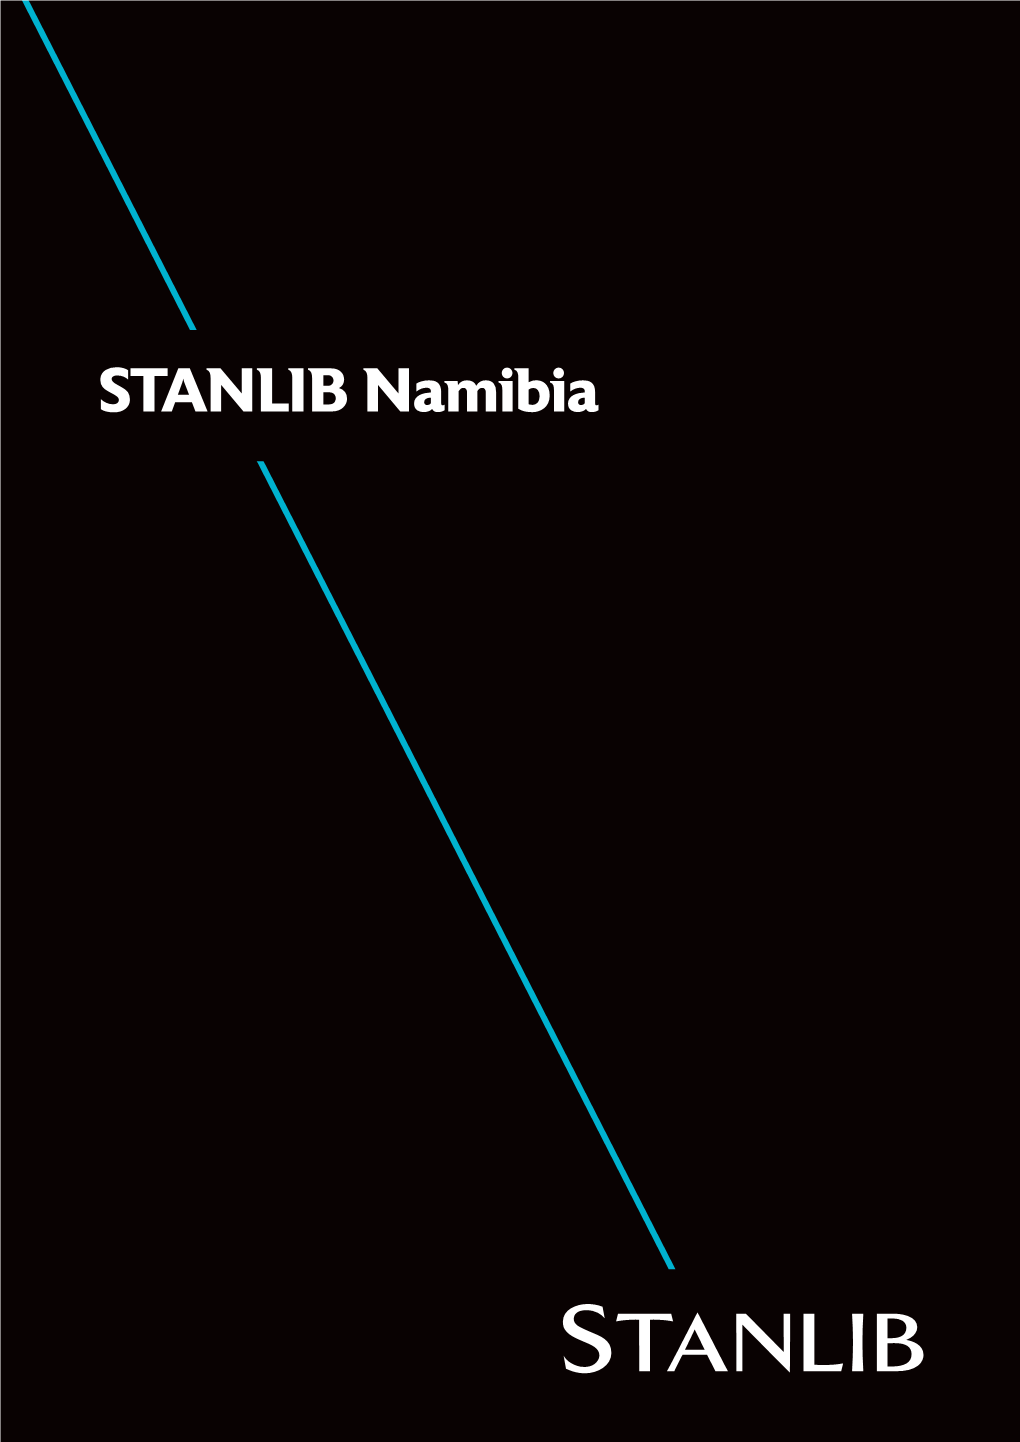 STANLIB Namibia